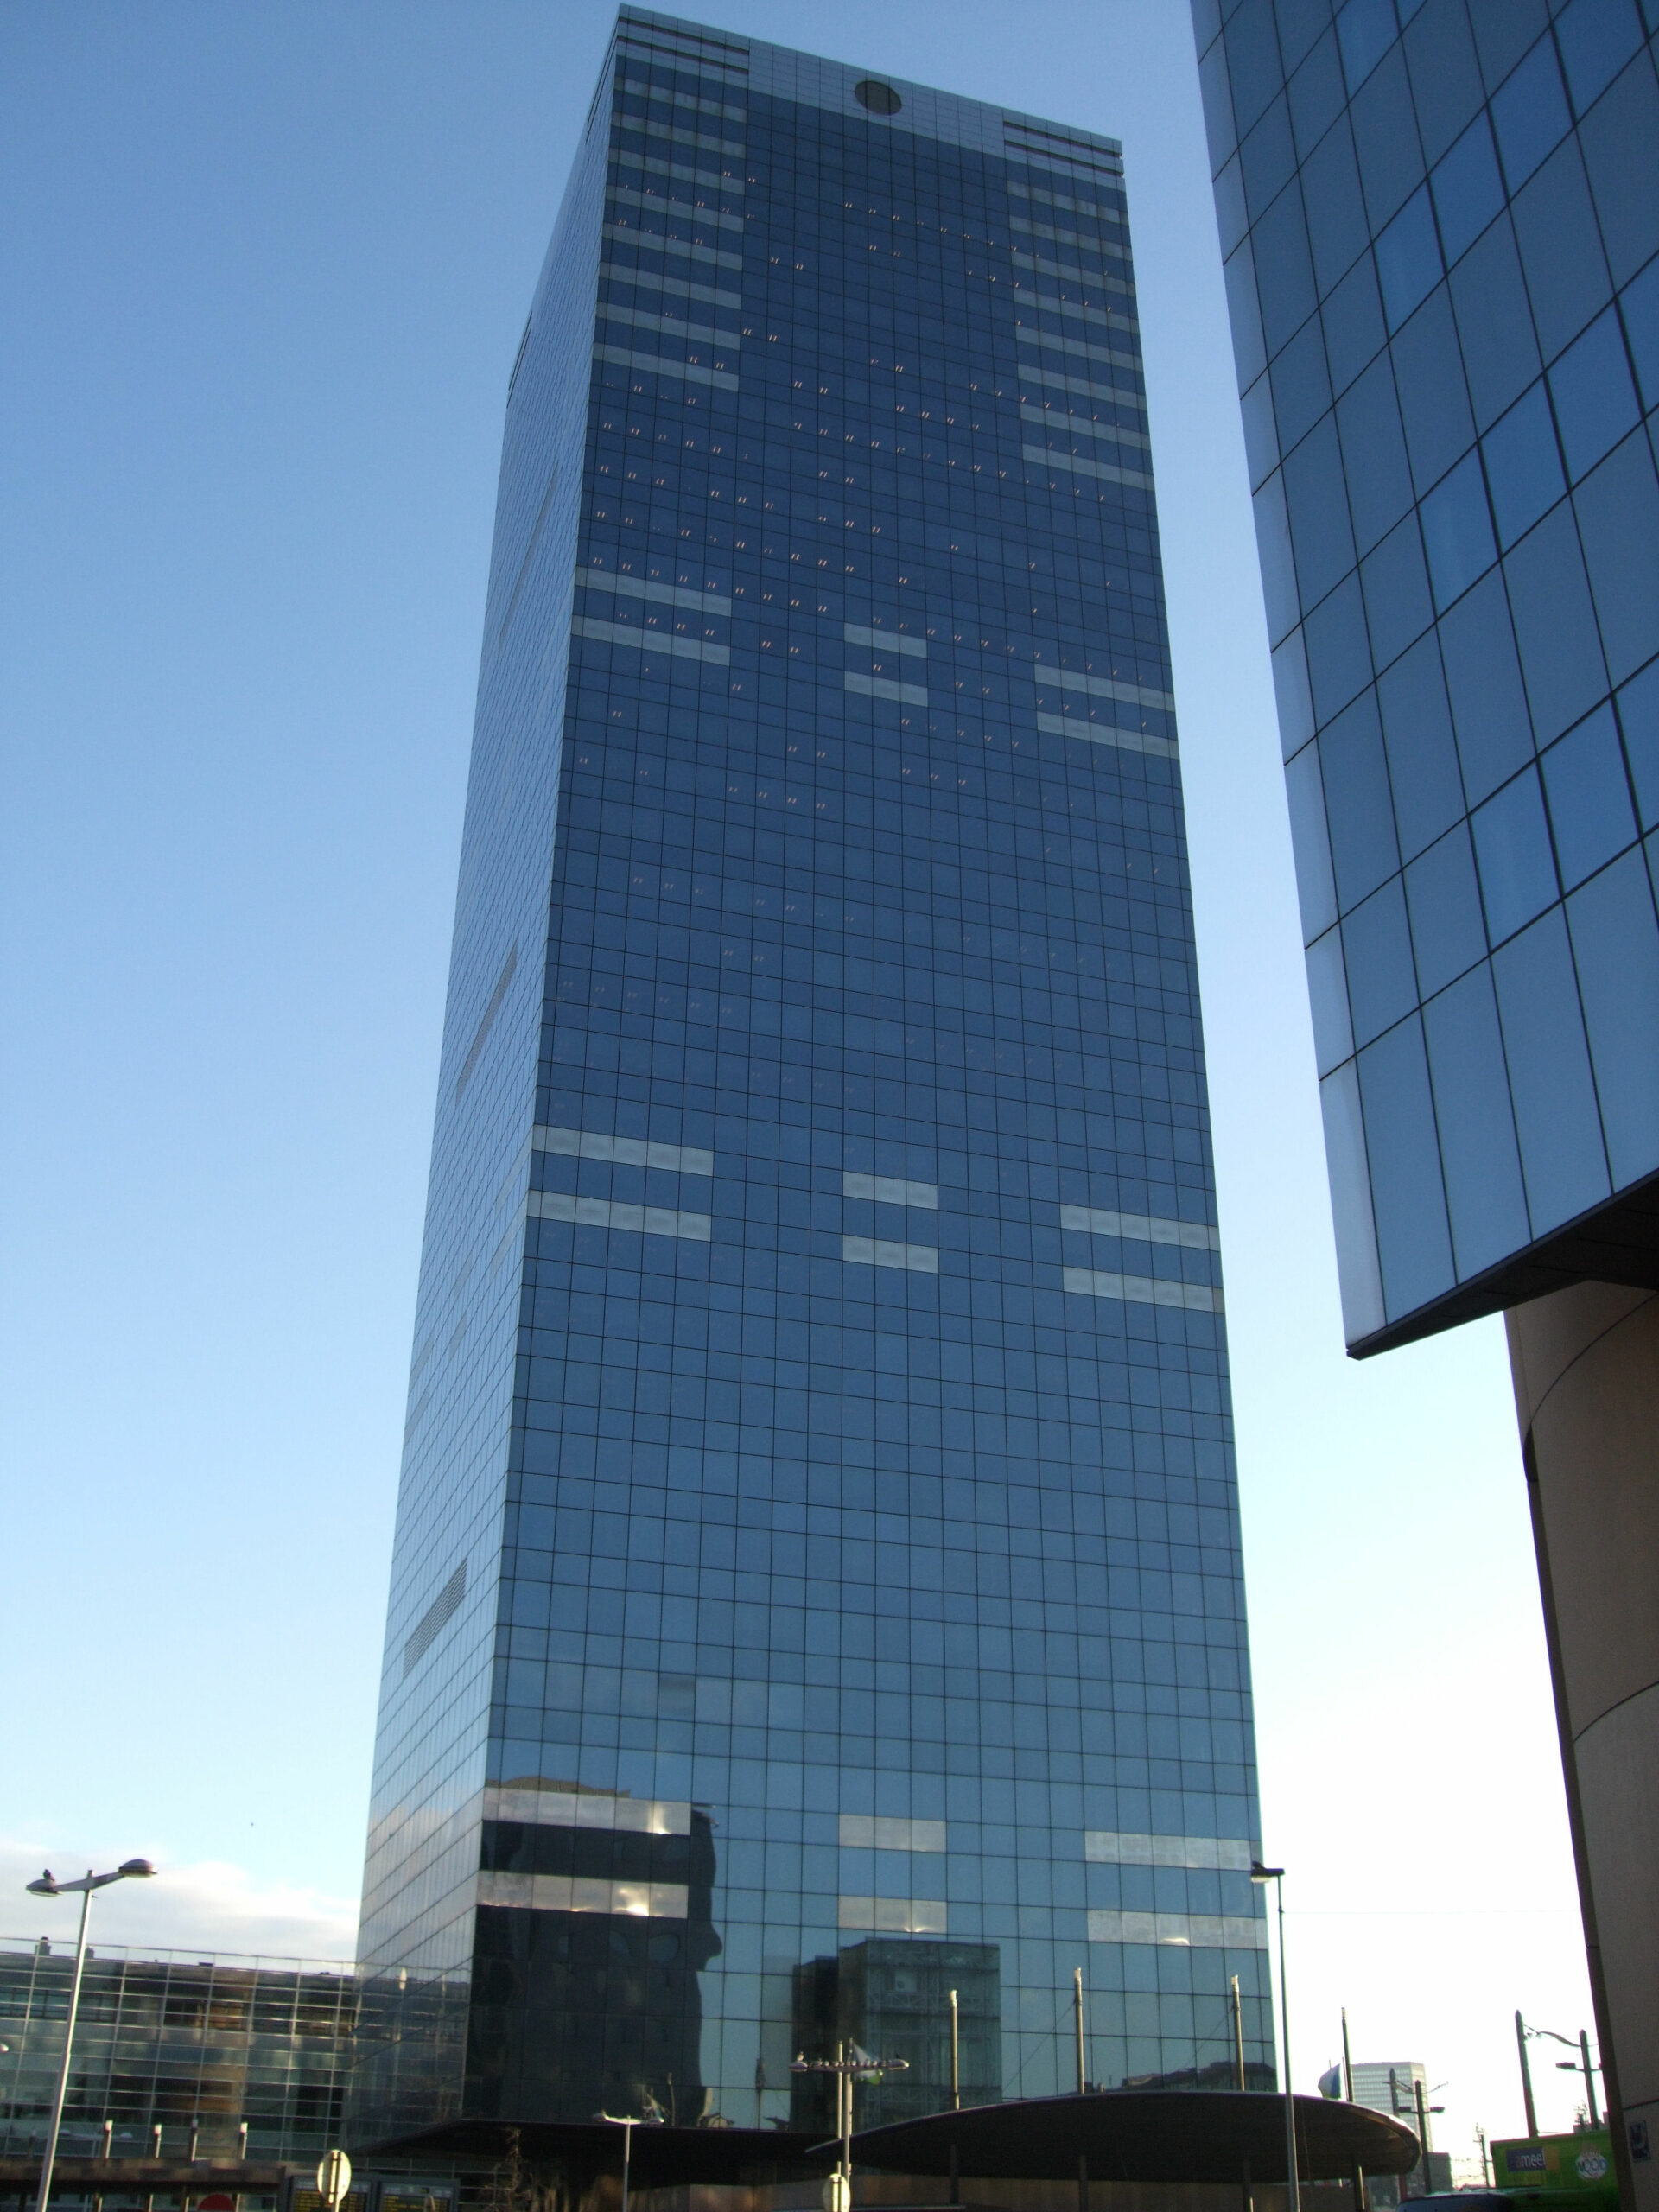 Tallest building of Belgium